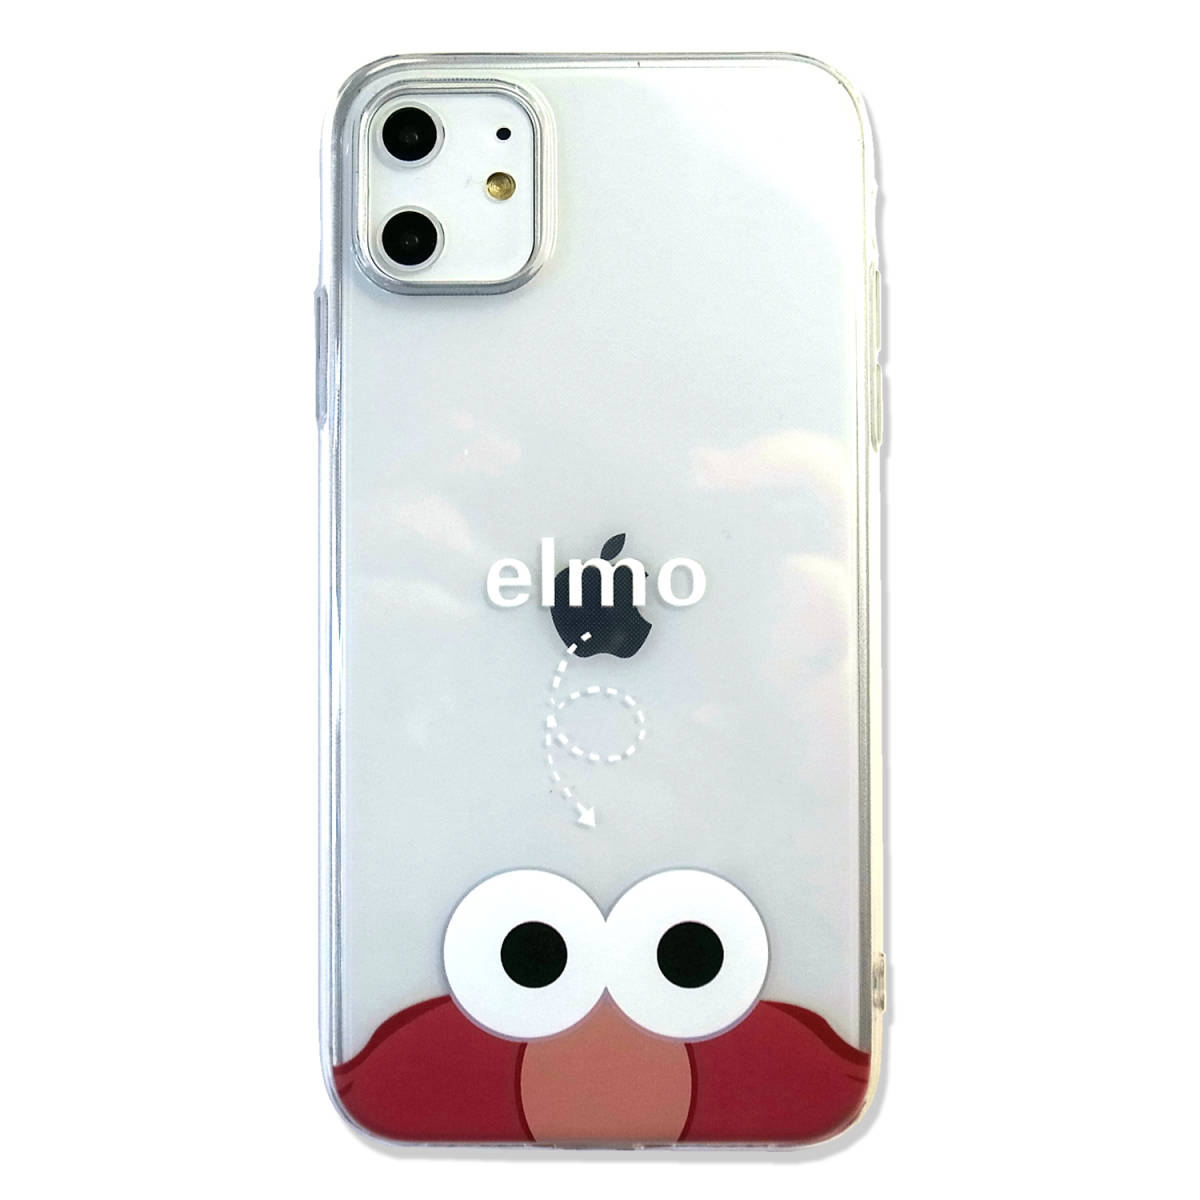  Elmo iPhone transparent case iPhone12mini iPhoneX iPhoneXR iPhone11 iPhone11Pro correspondence Sesame Street 